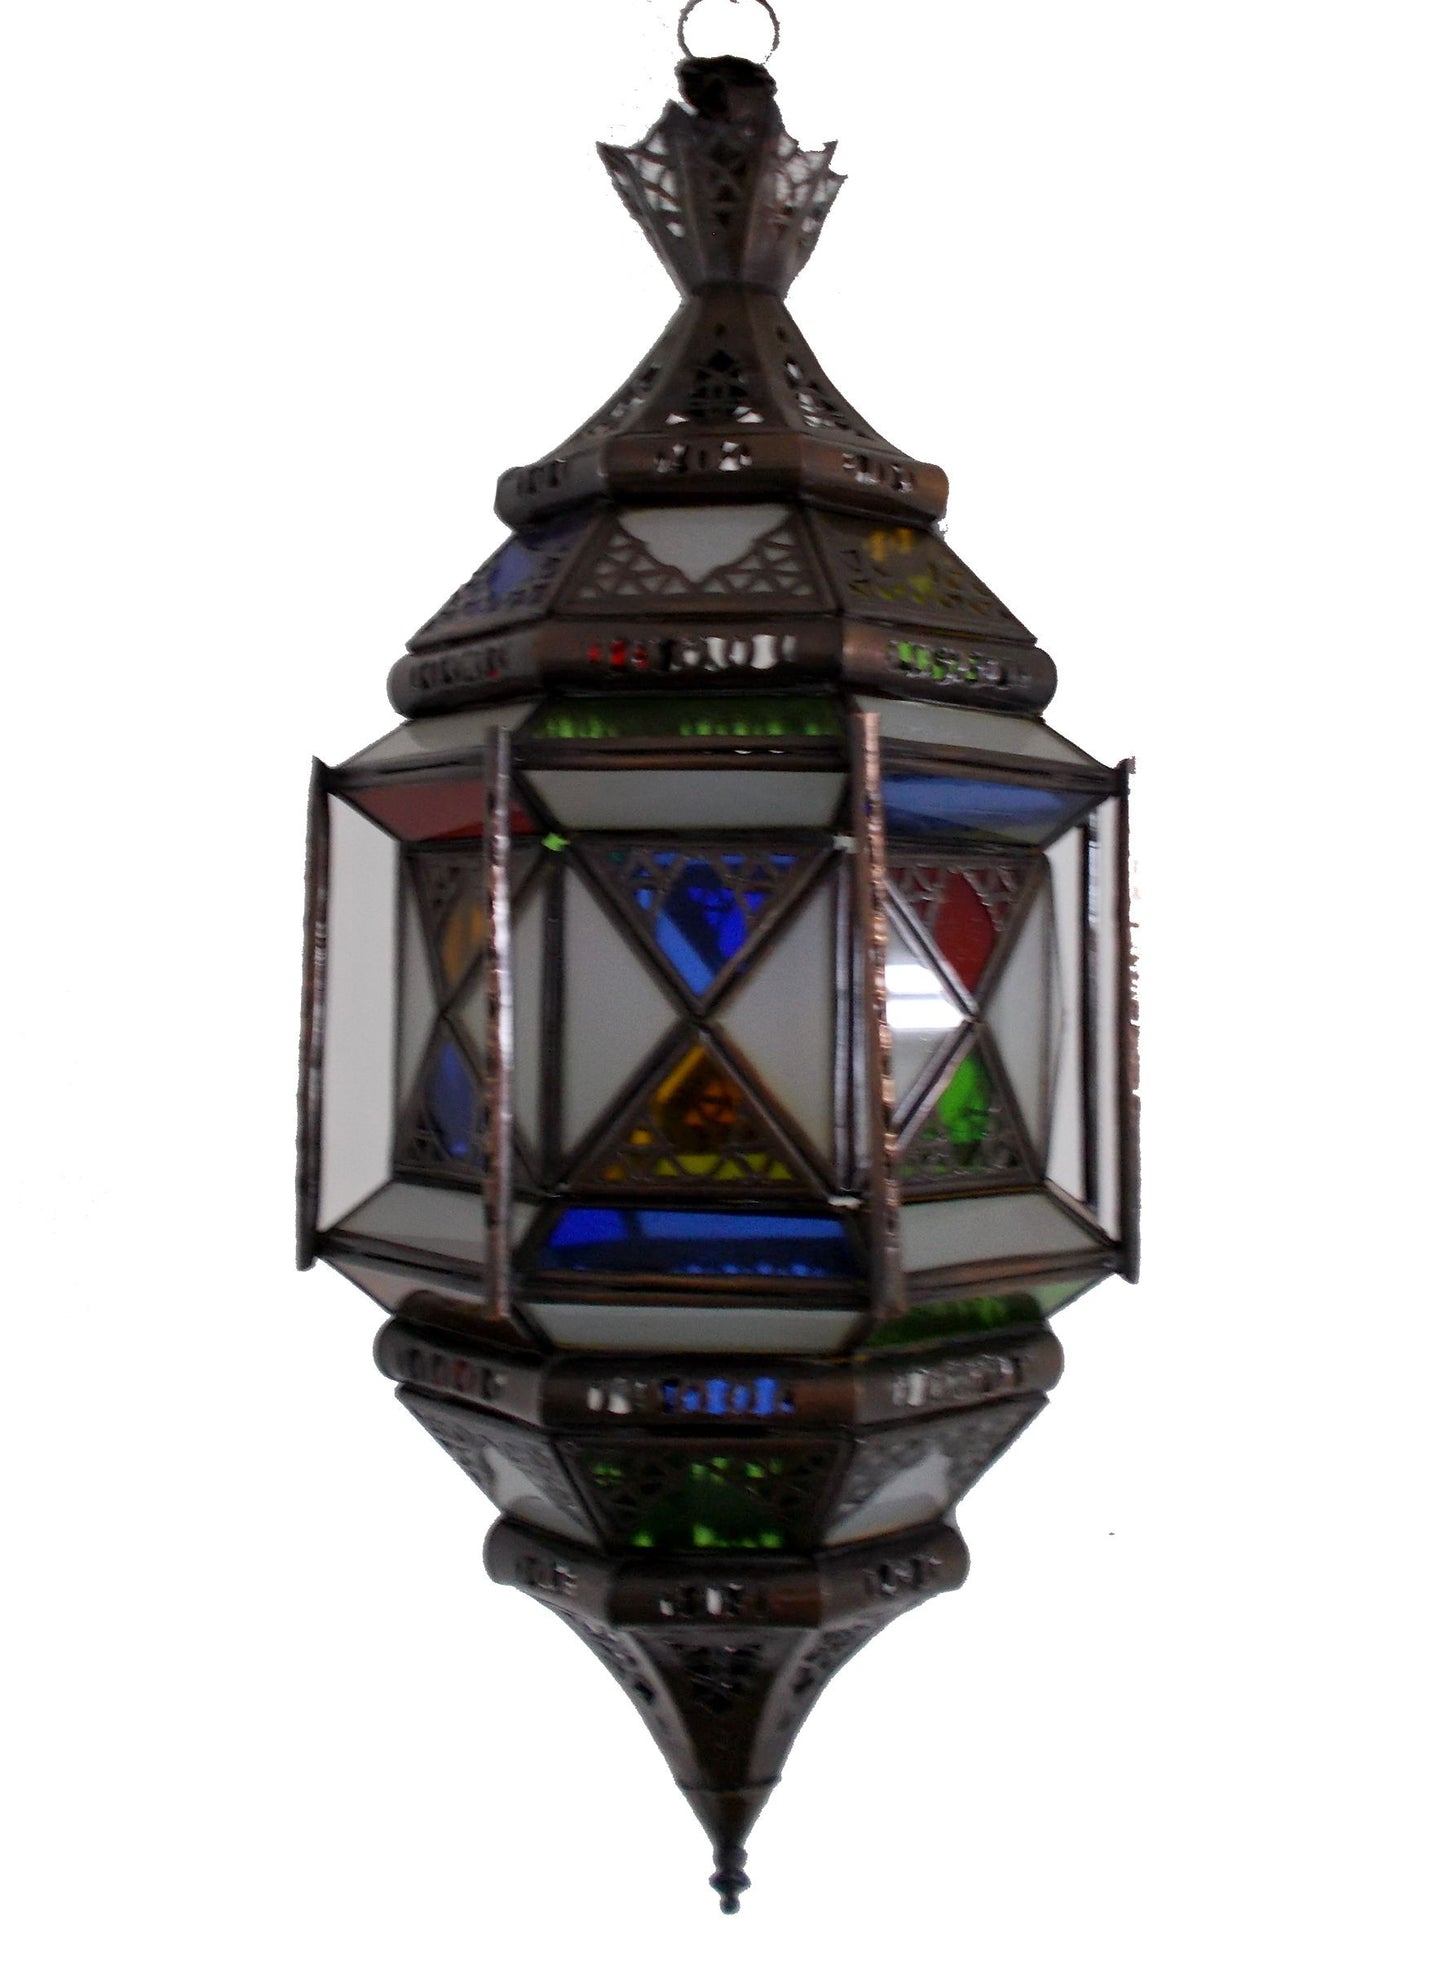 Arredamento Etnico Lampadario Marocchino Lampada Lanterna Orientale  2307181151